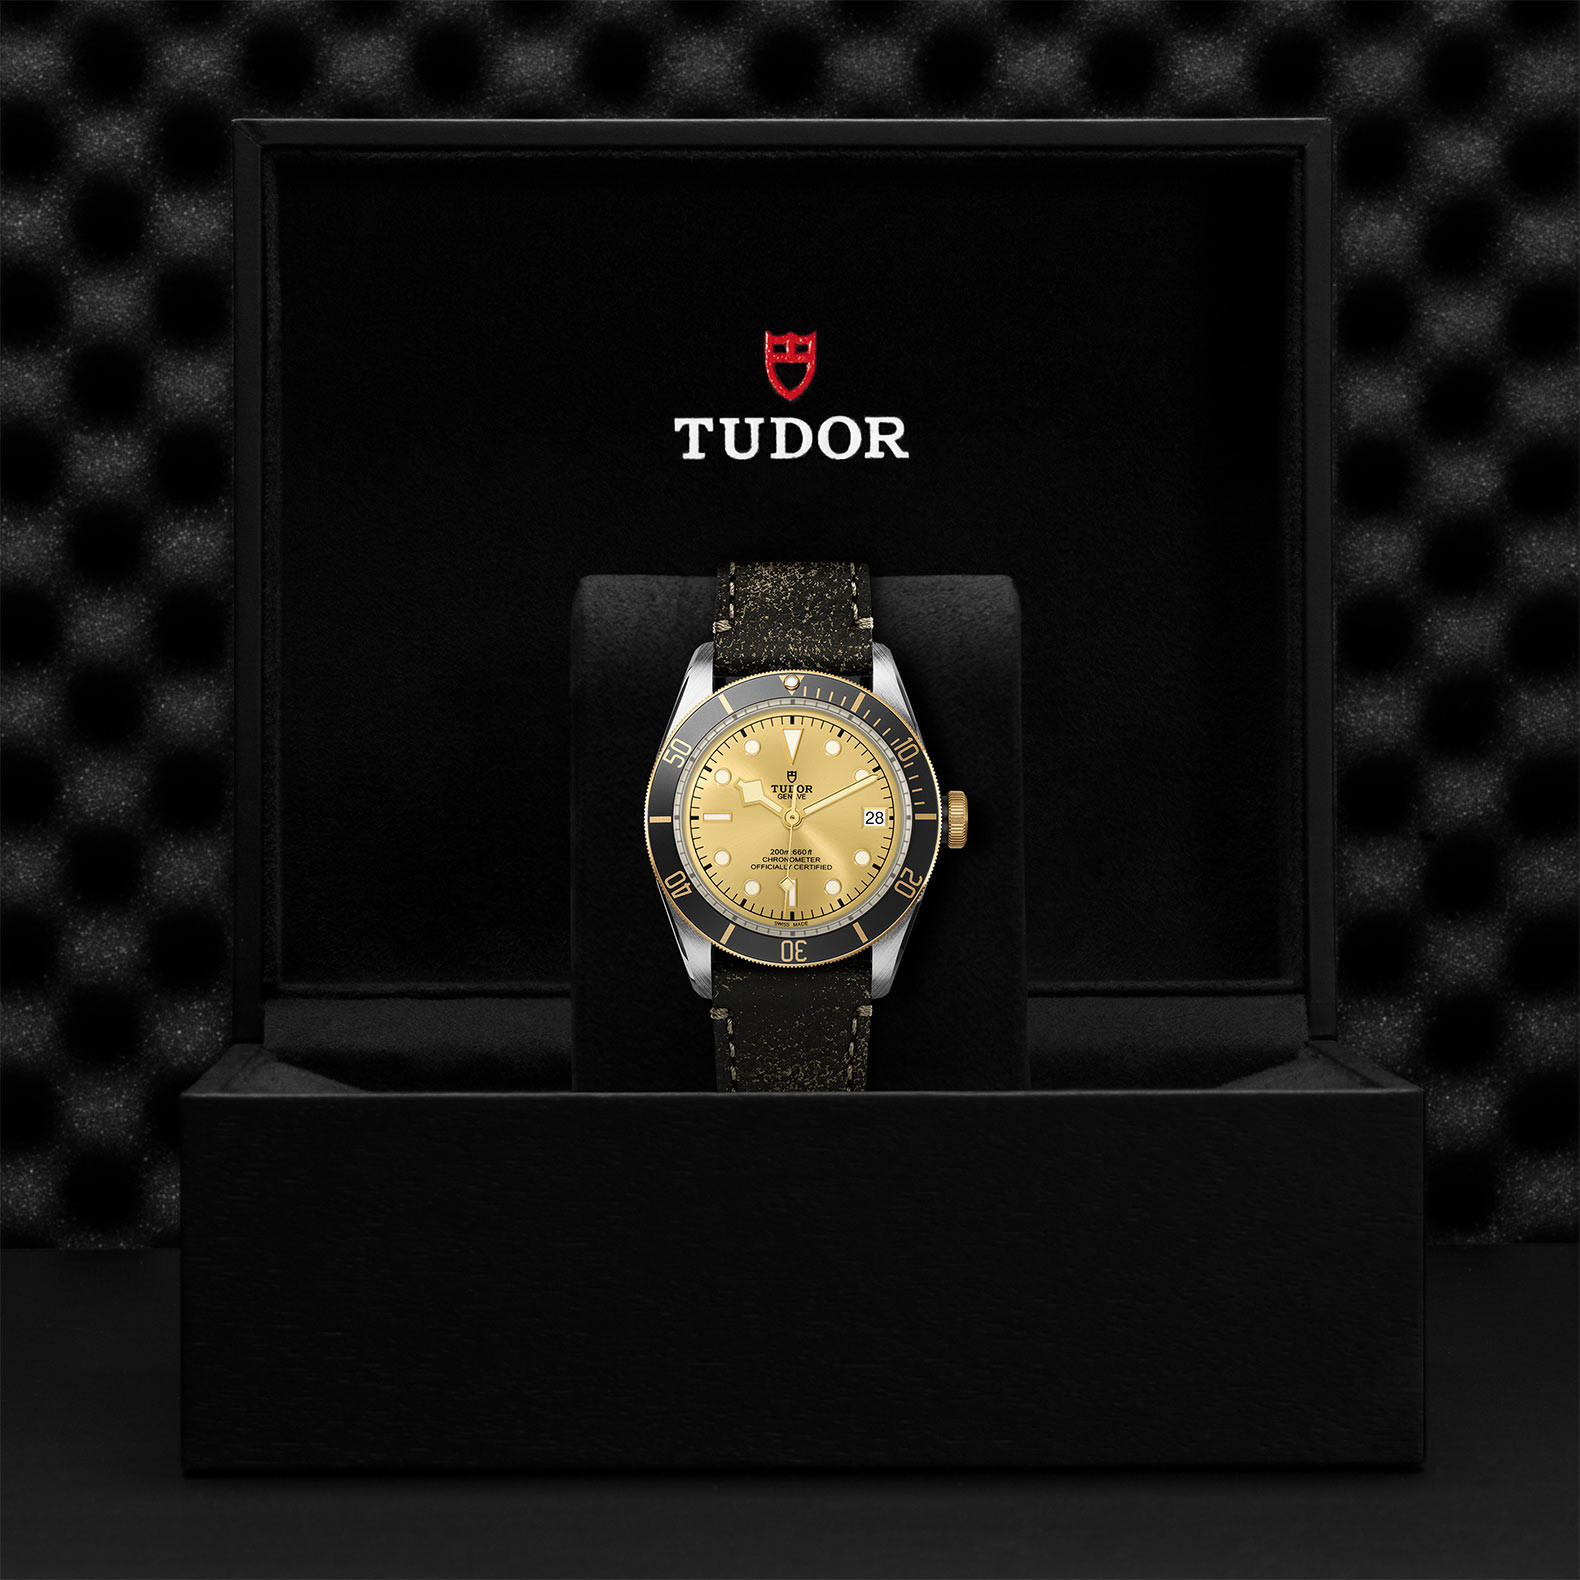 TUDOR Black Bay S&G Watch in Presentation Box